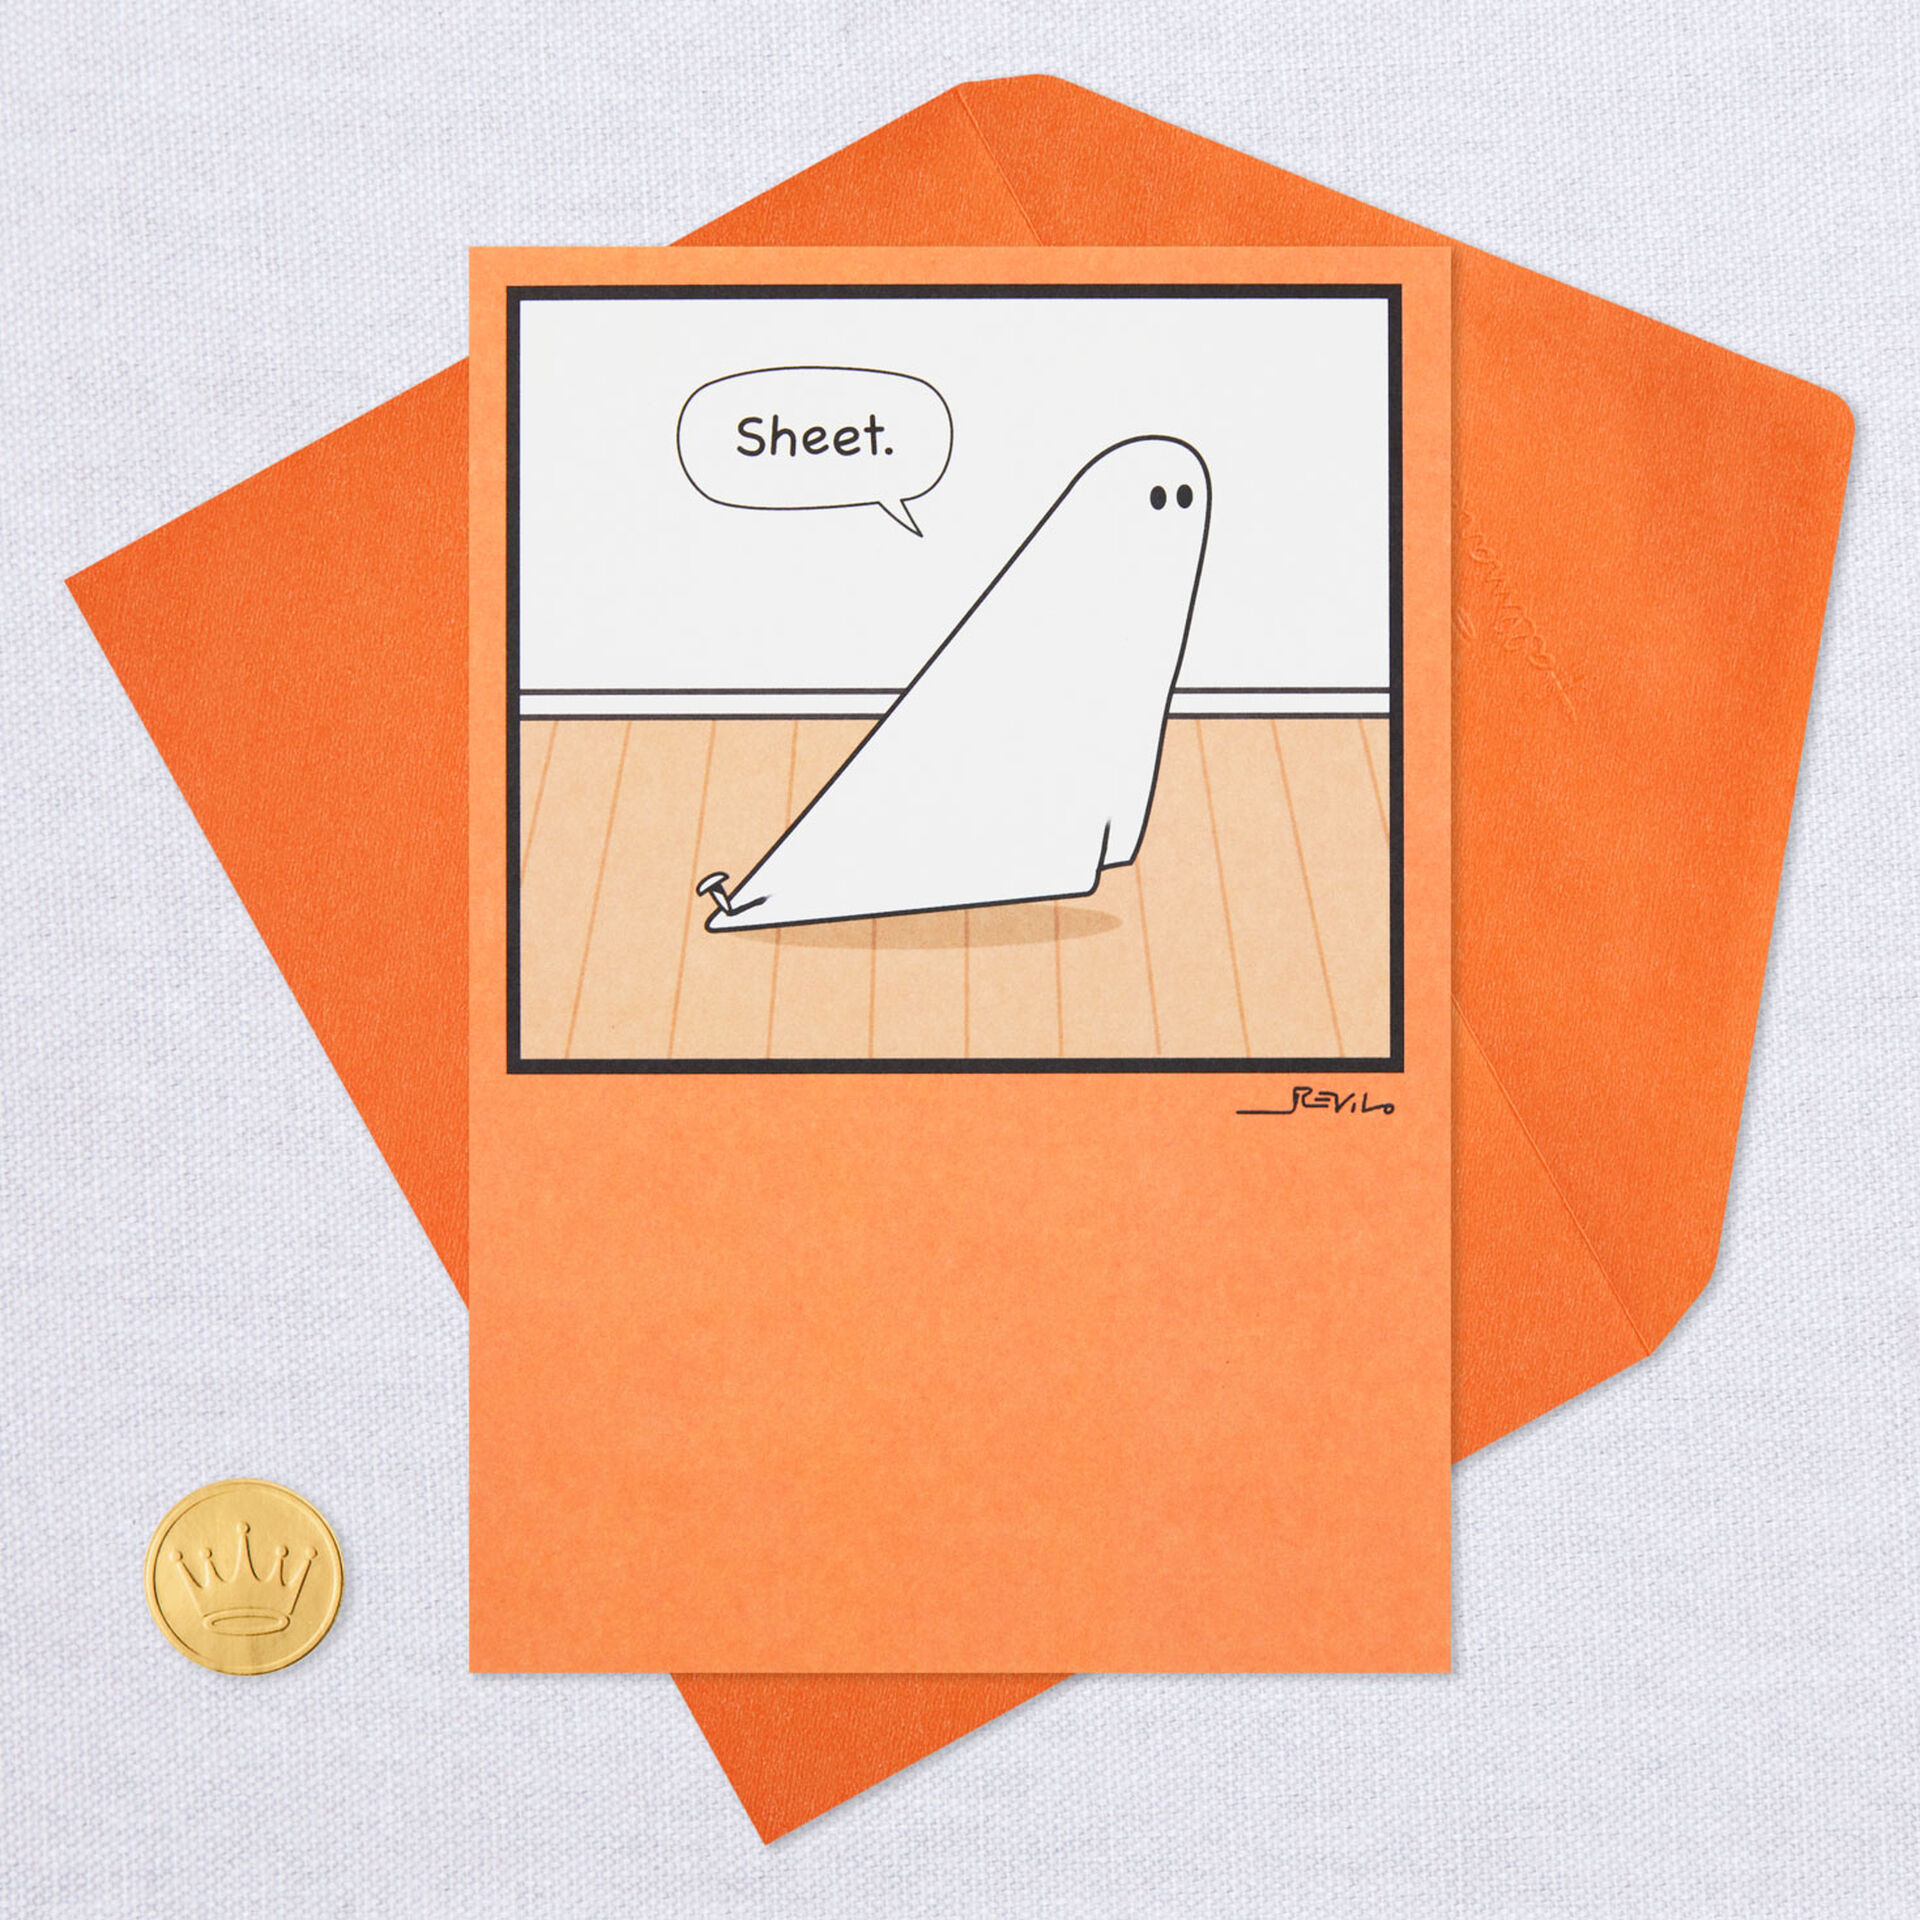 Holy Sheet Ghost Funny Halloween Card Greeting Cards Hallmark